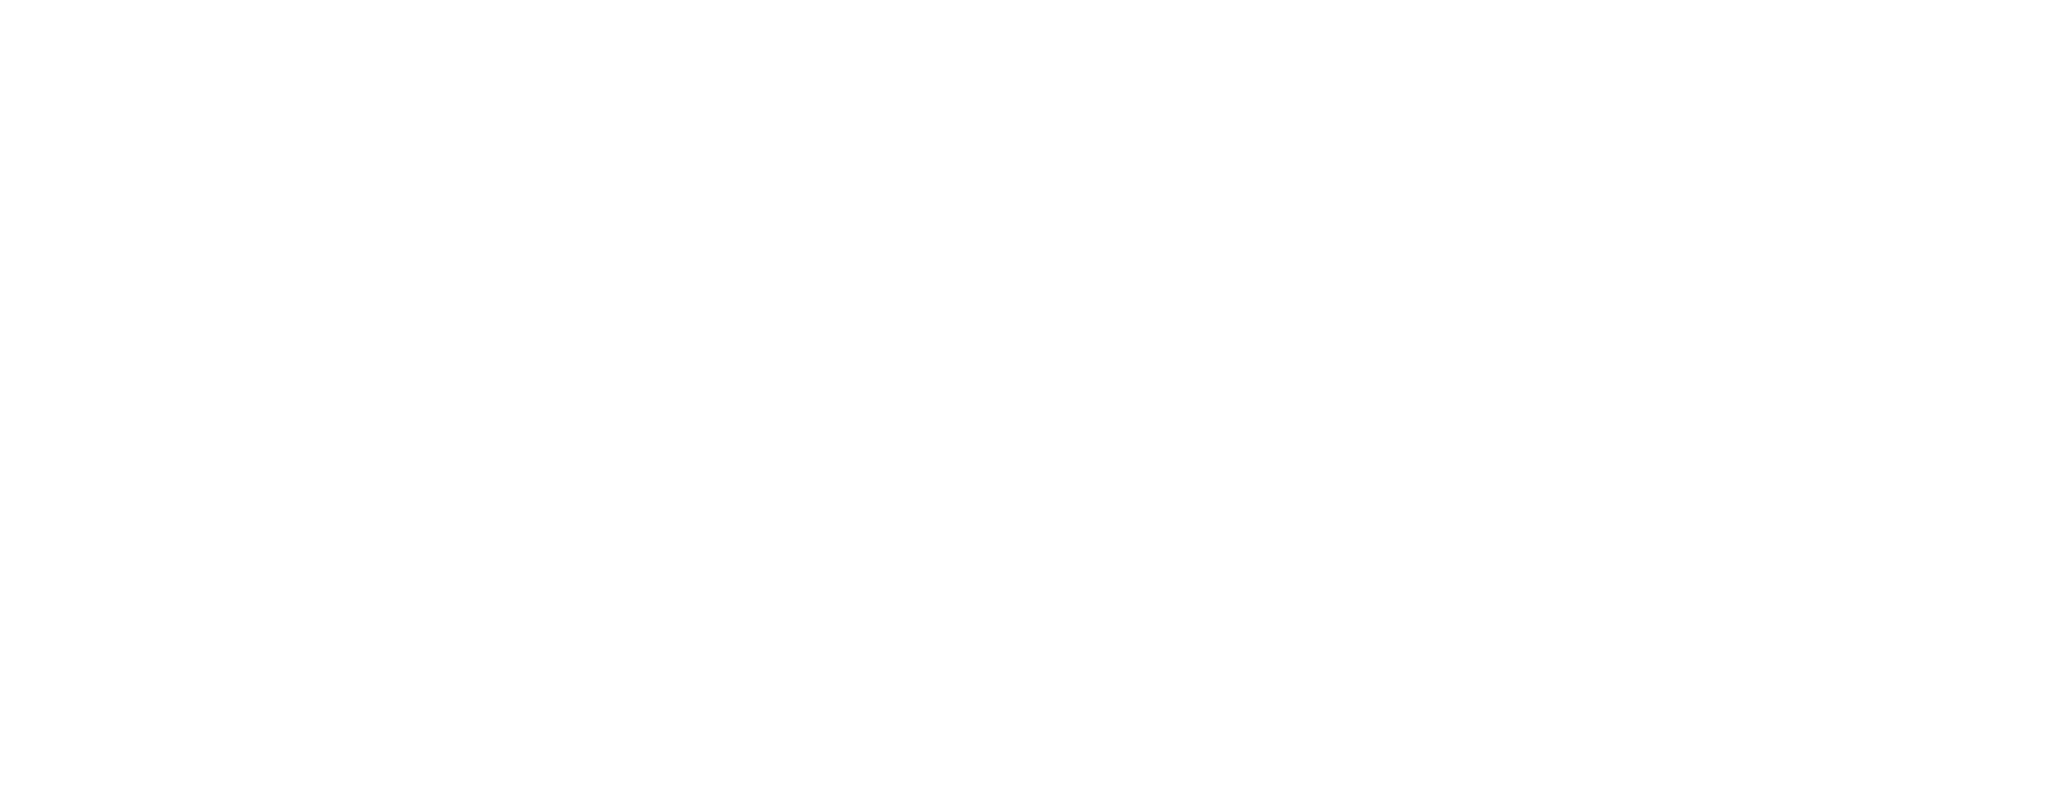 Alternative Funding